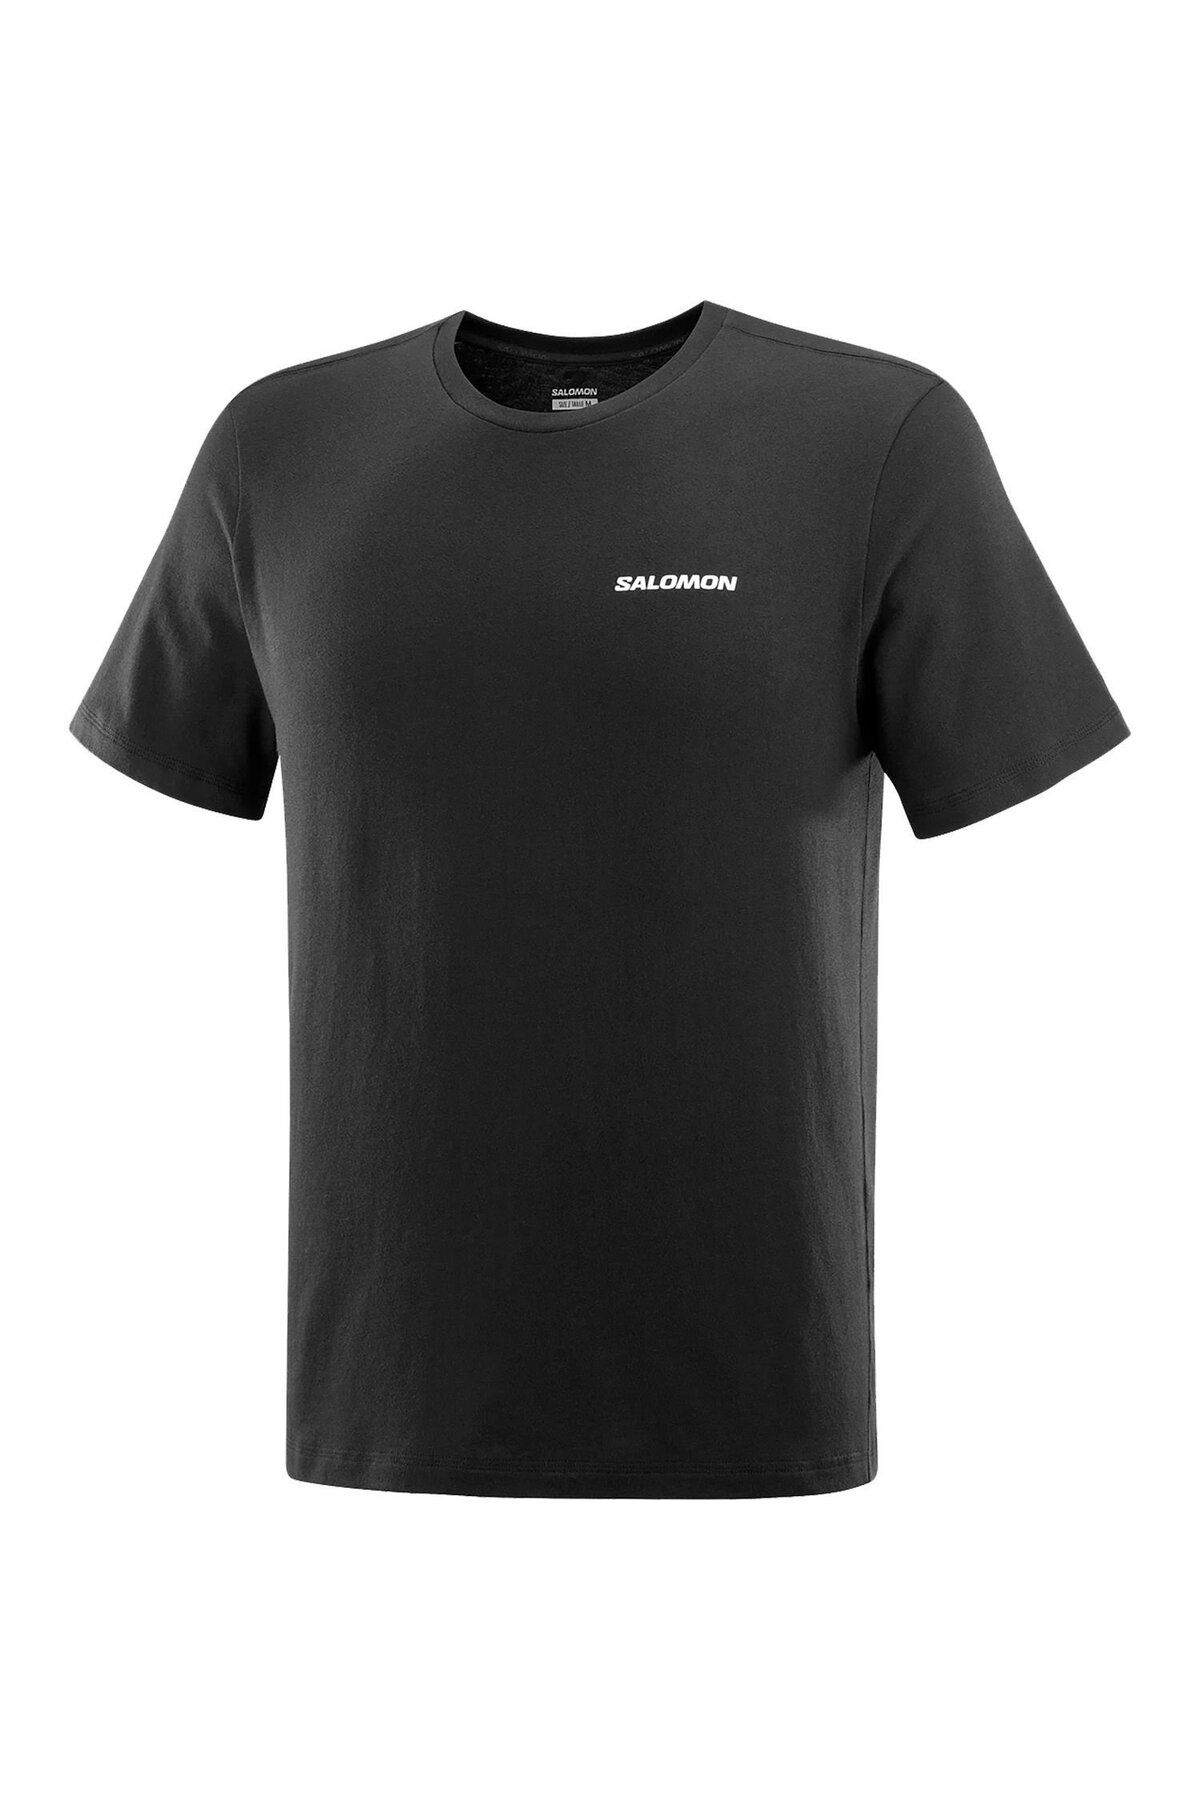 Salomon Lc2219 Graphic Perf Ss Tee Tişört Erkek T-shirt Siyah